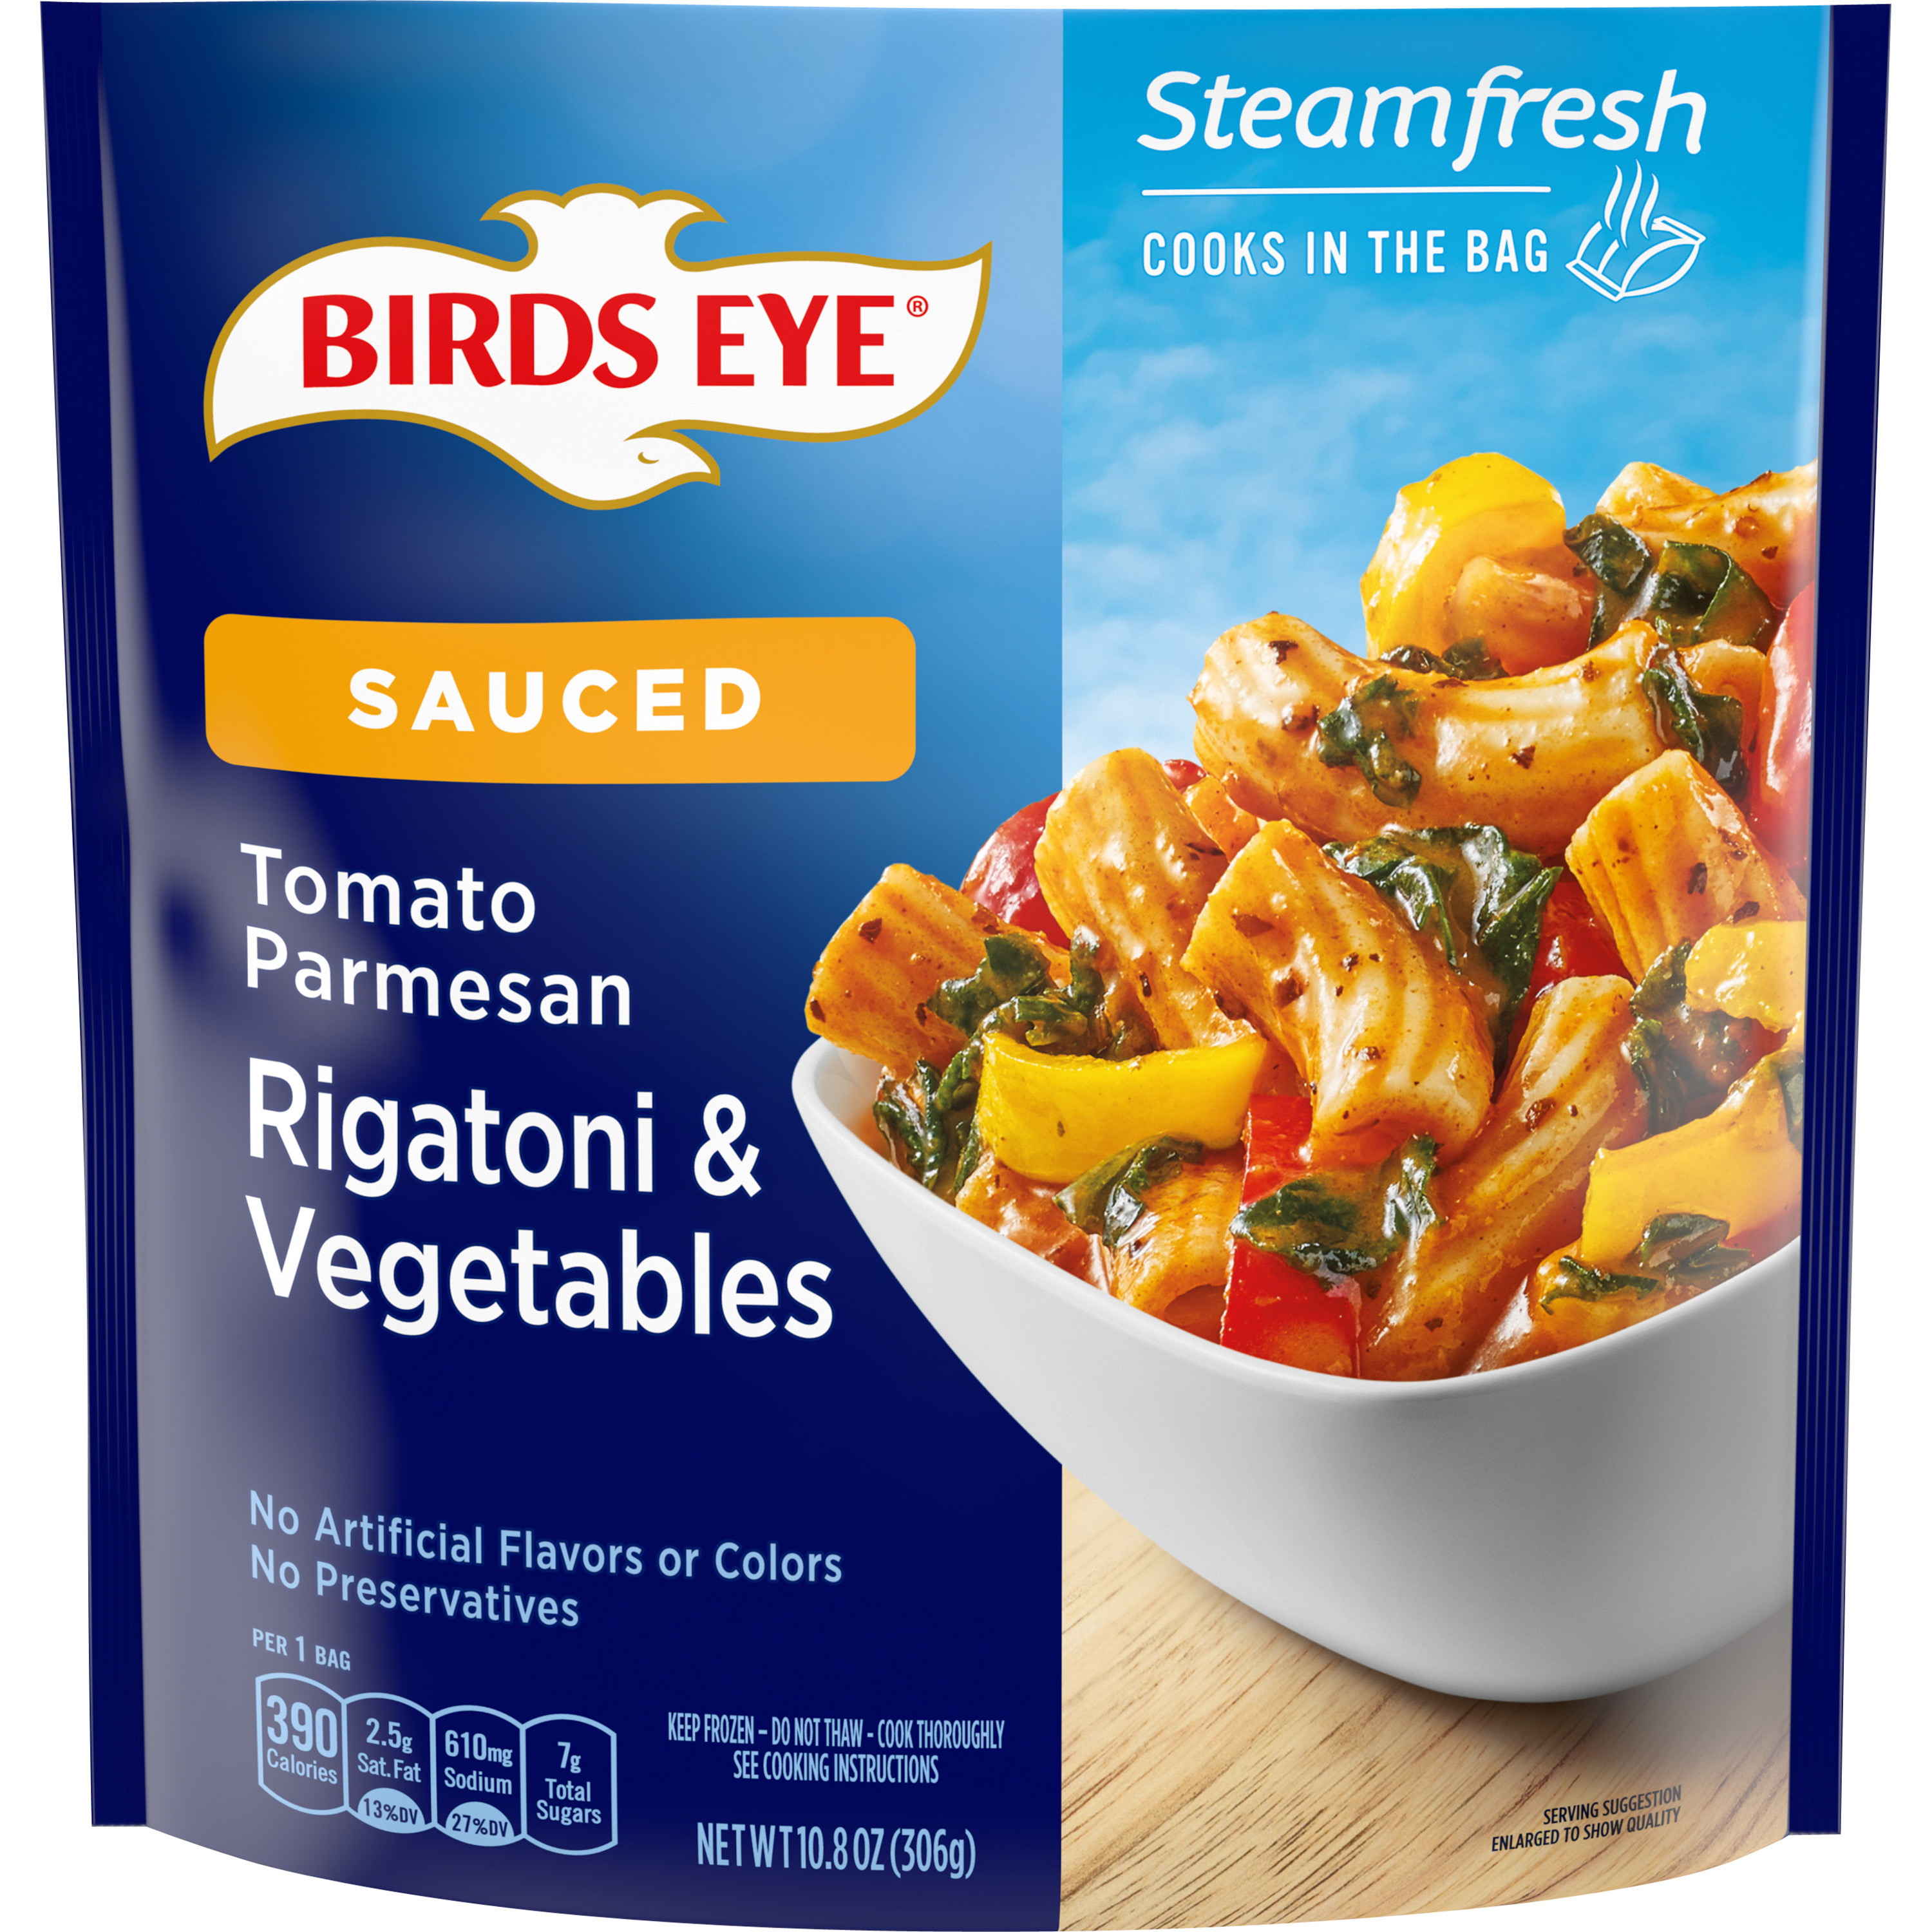 Birds Eye Steamfresh Chef’s Favorites Sauced Rigatoni & Vegetables with Tomato Parmesan Sauce